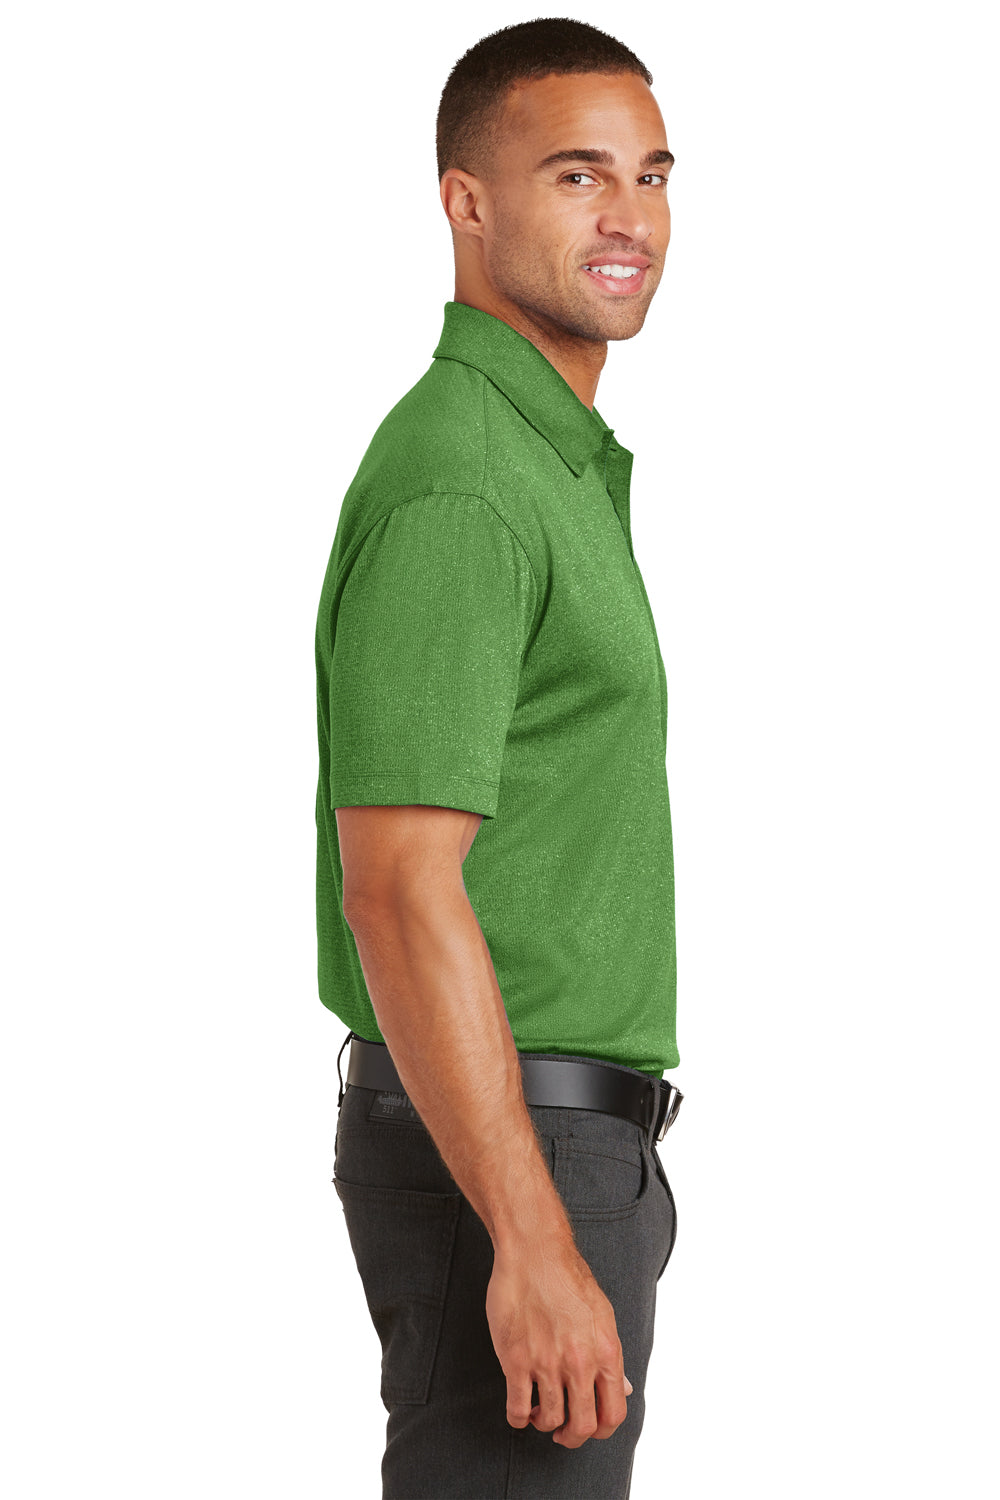 Port Authority K576 Mens Trace Moisture Wicking Short Sleeve Polo Shirt Heather Vine Green Side